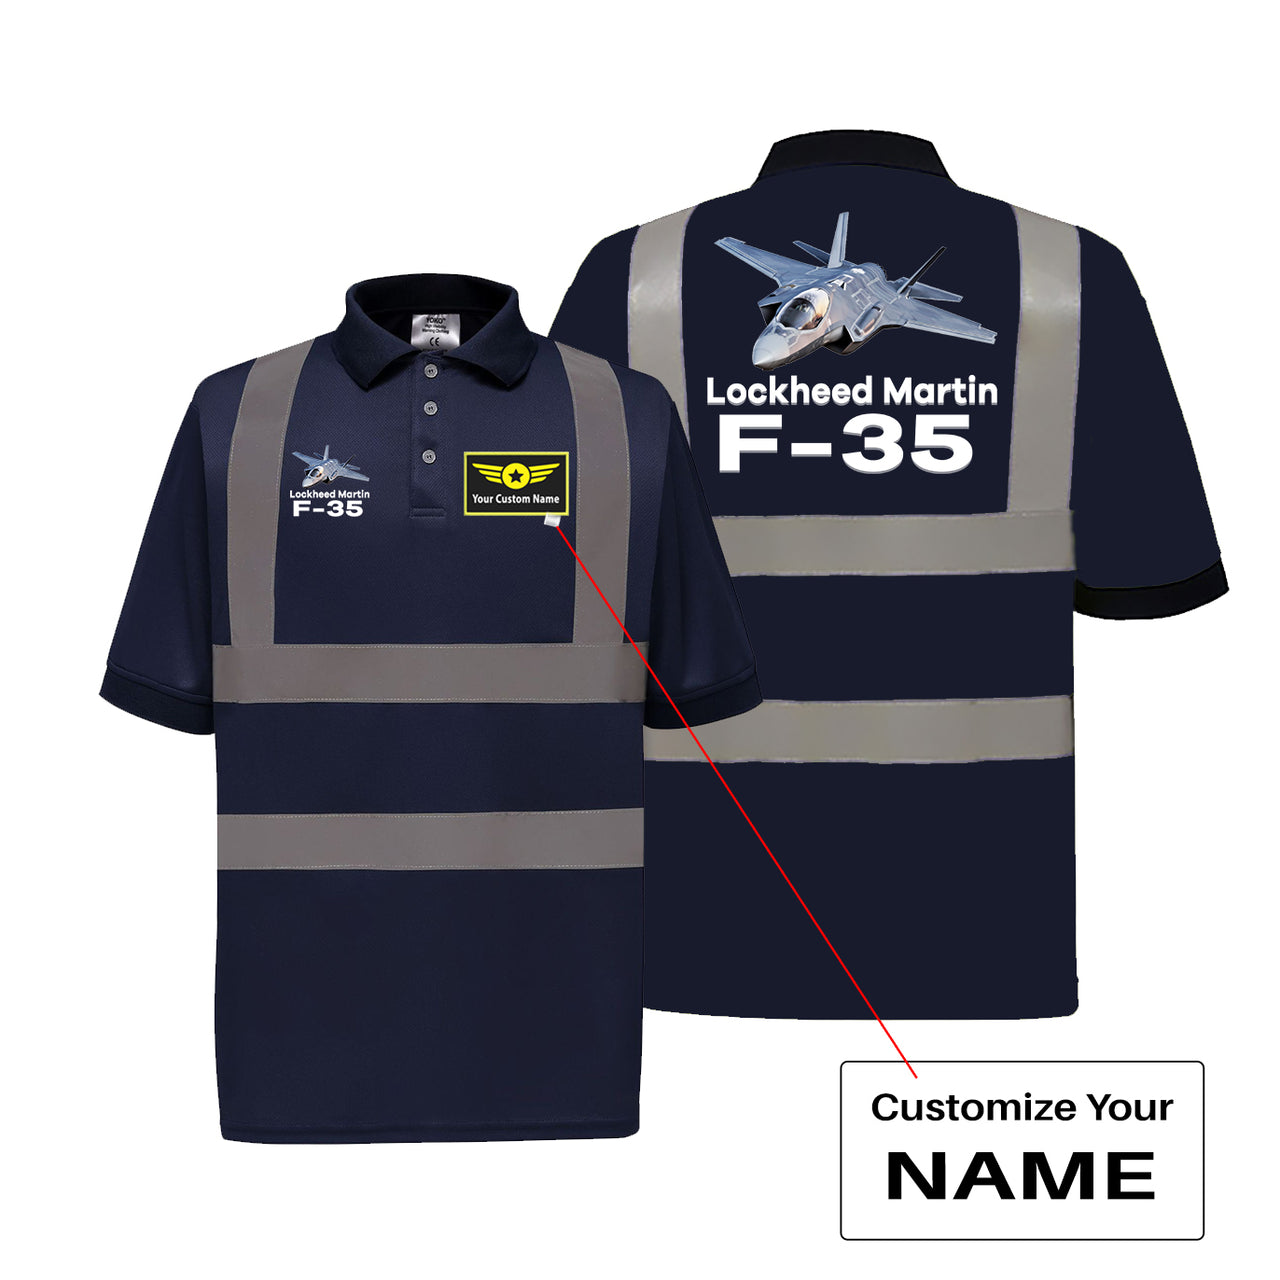 The Lockheed Martin F35 Designed Reflective Polo T-Shirts